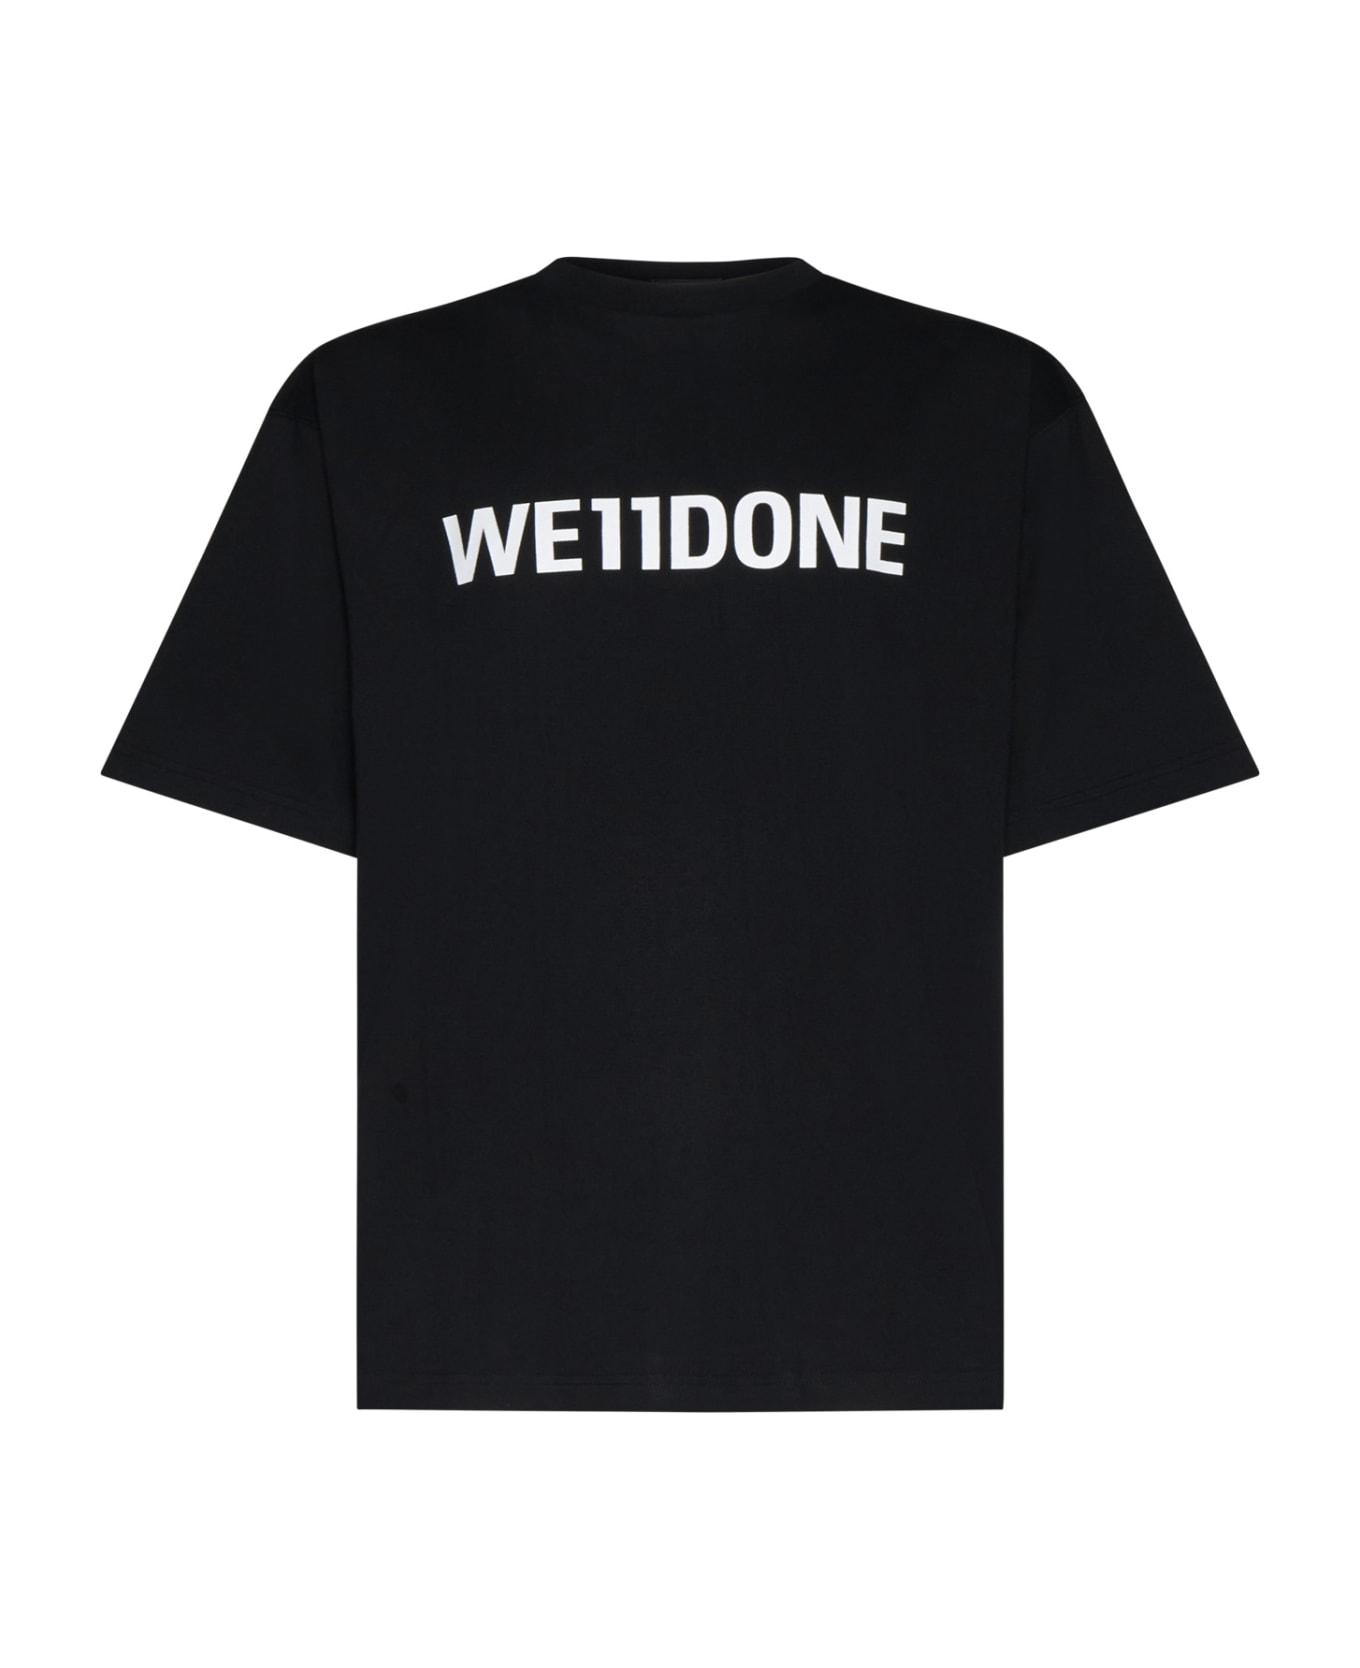 WE11 DONE T-Shirt - Black